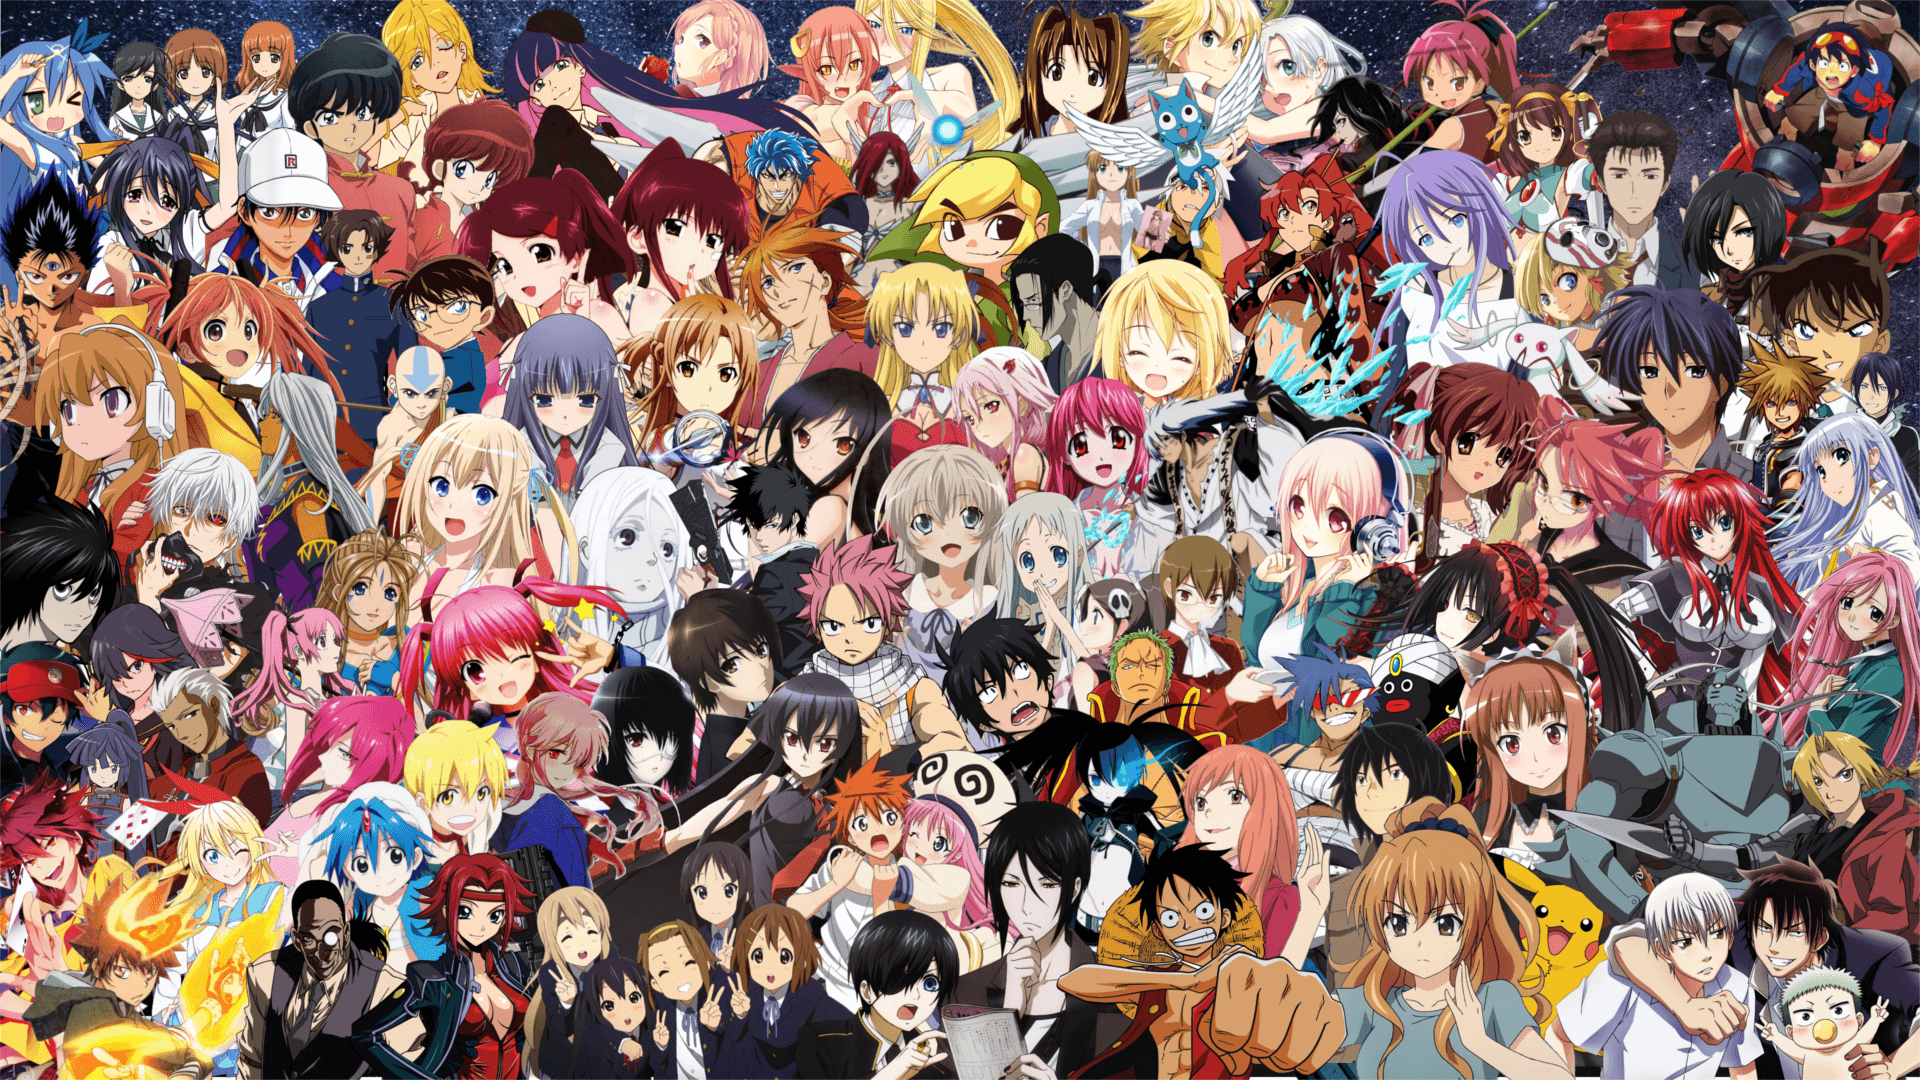 Popular Anime Characters Wallpaper on .wallpaper.dog